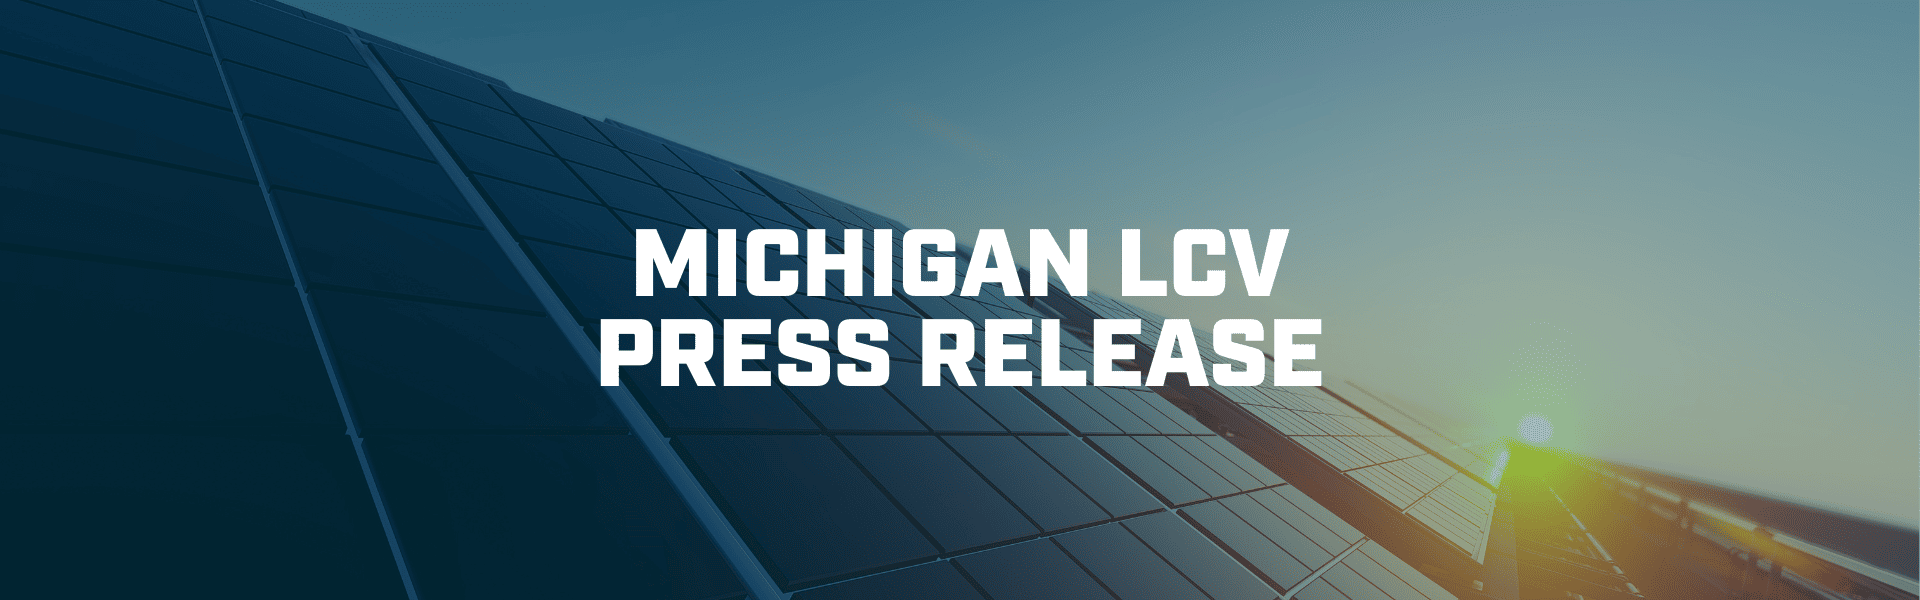 Michigan LCV applauds final EPA methane emissions rule